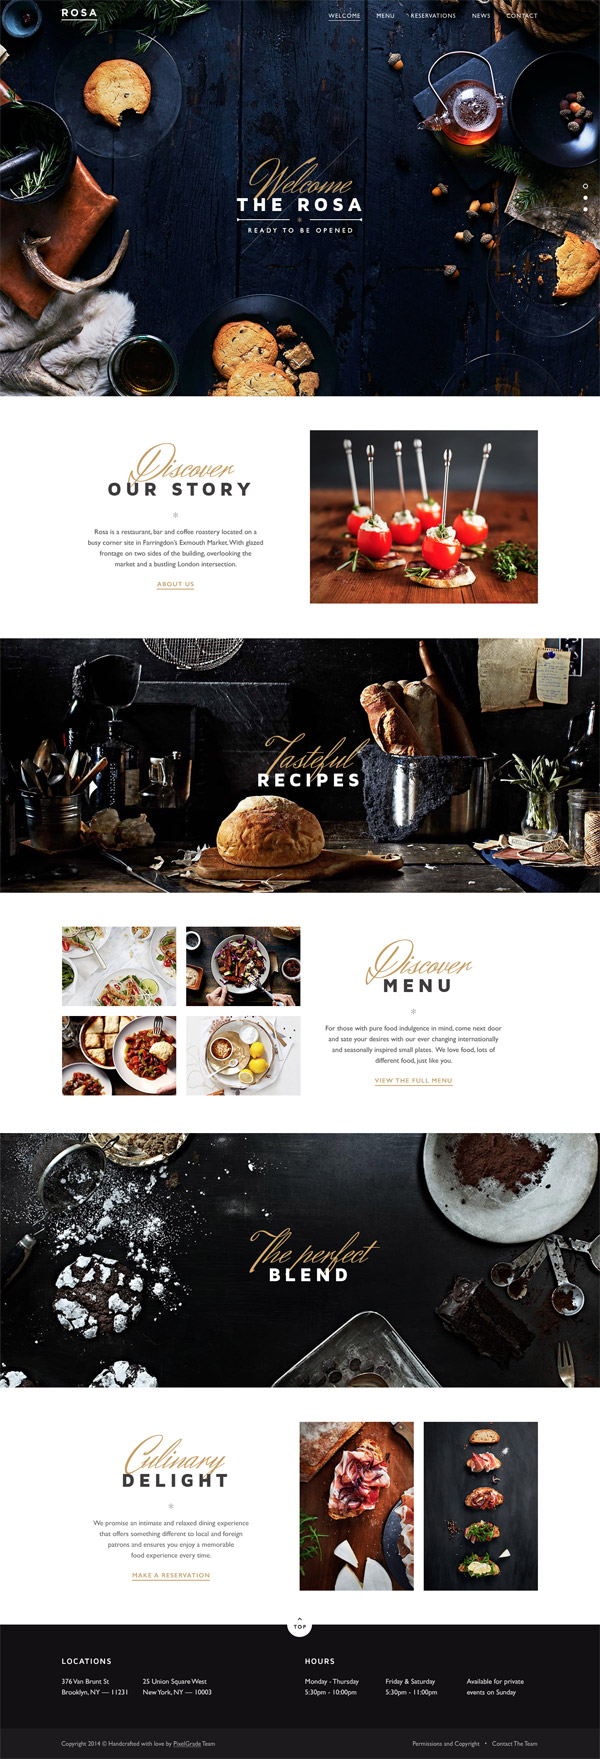 Rosa Restaurant Website fullpage website